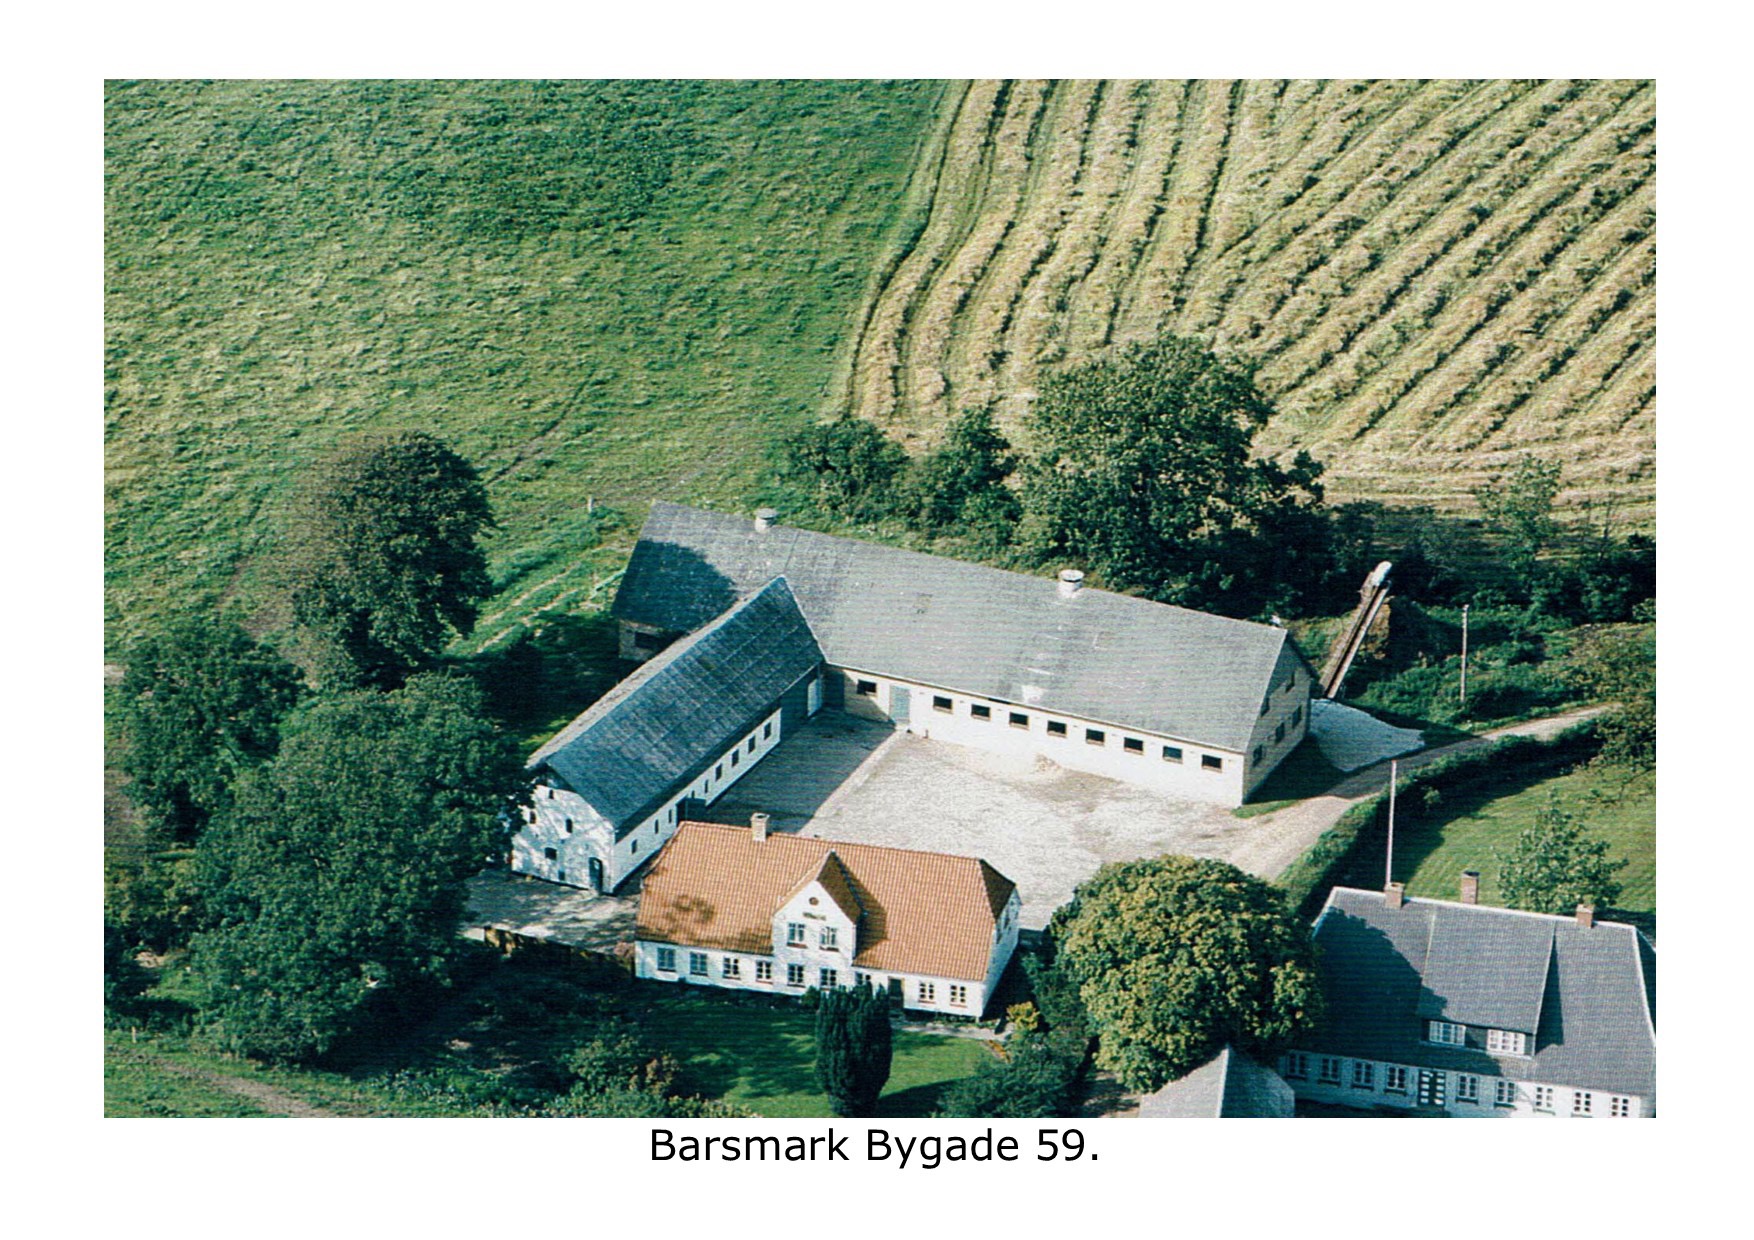 Barsmark Bygade 59 